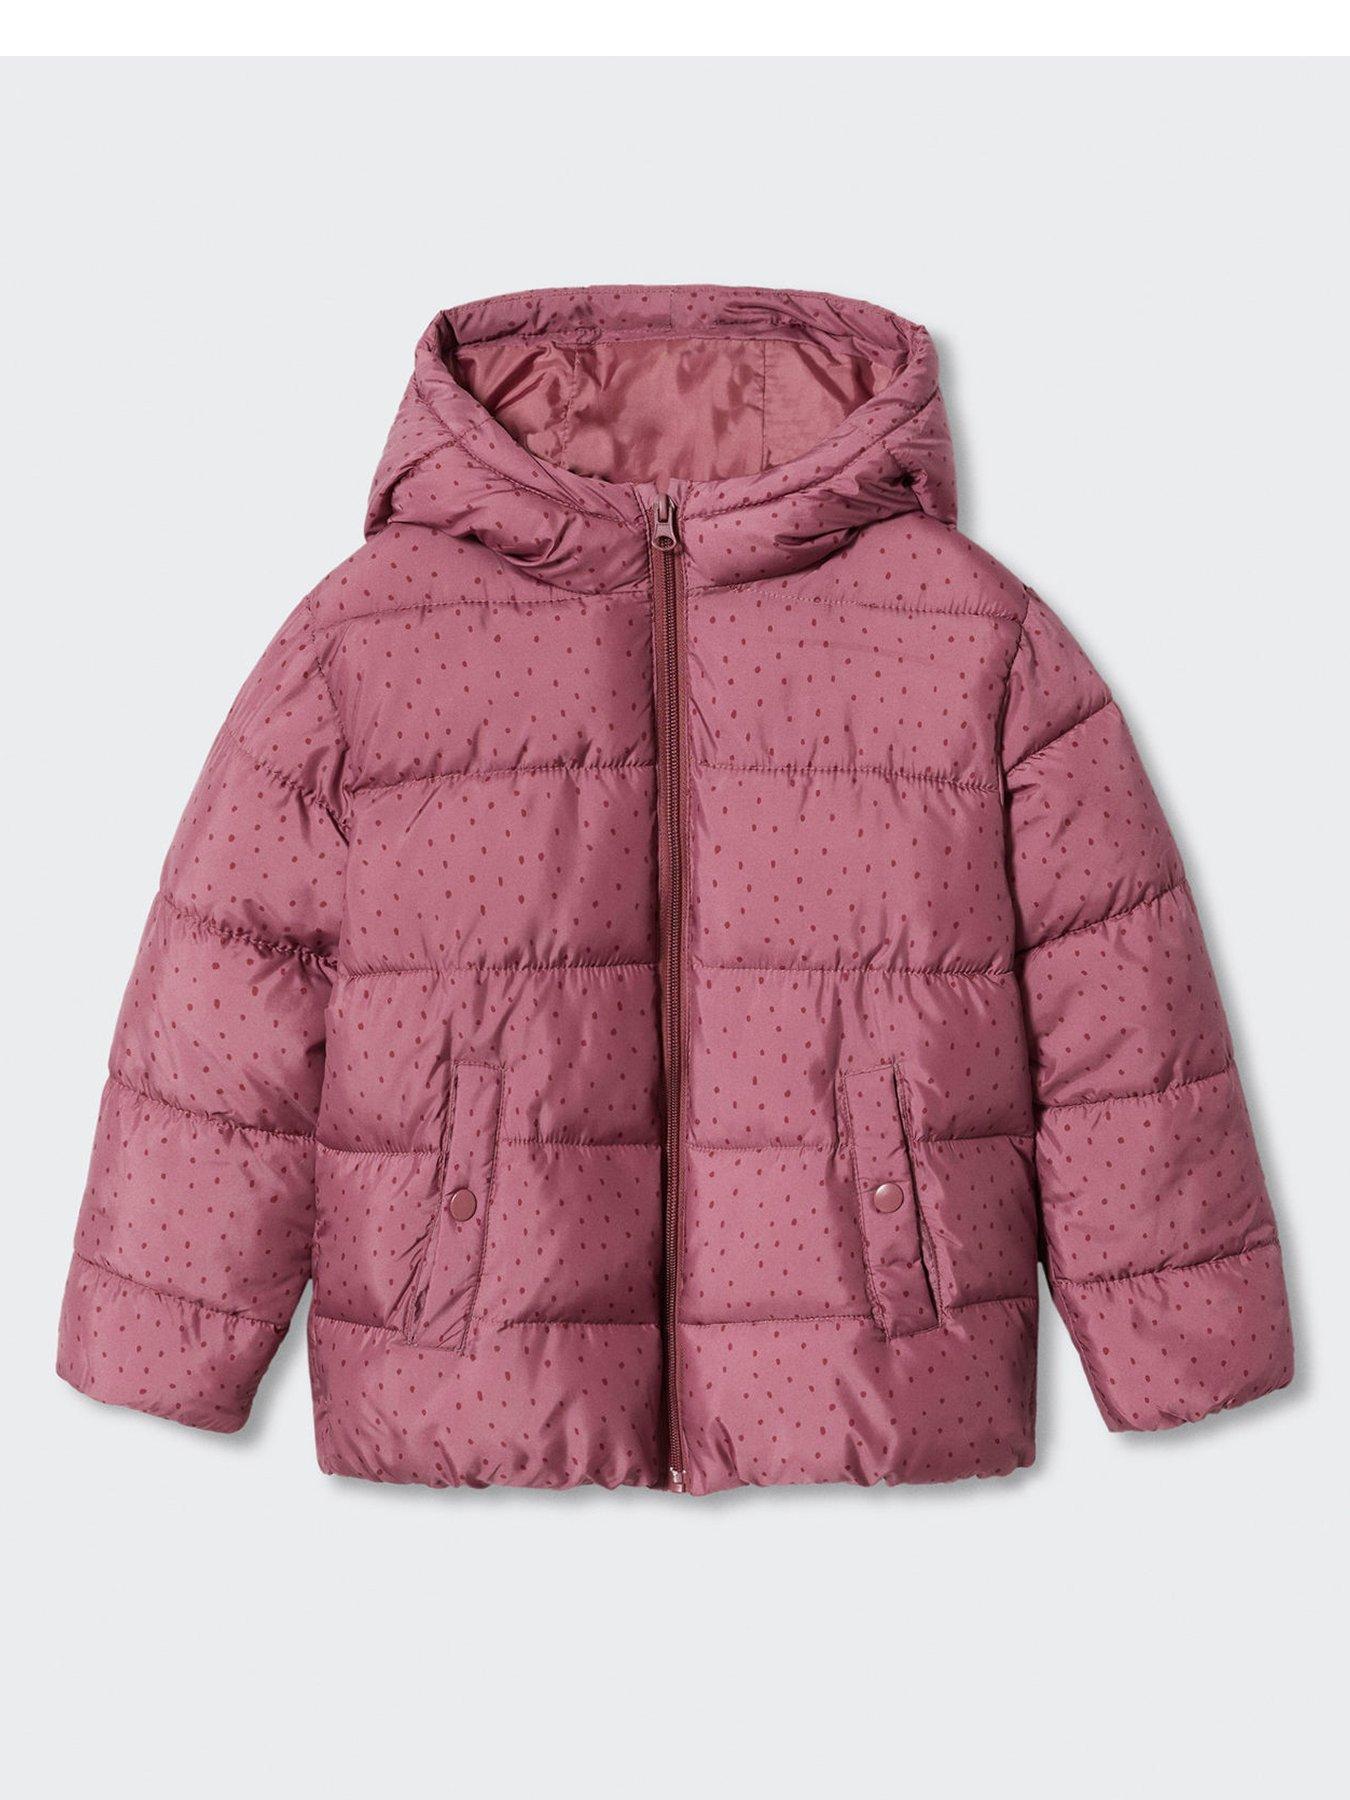 Girls Belted Hooded Warm Fleece Back to School Military Jacket Kids Coat Age 7 8 9 10 11 12 13 